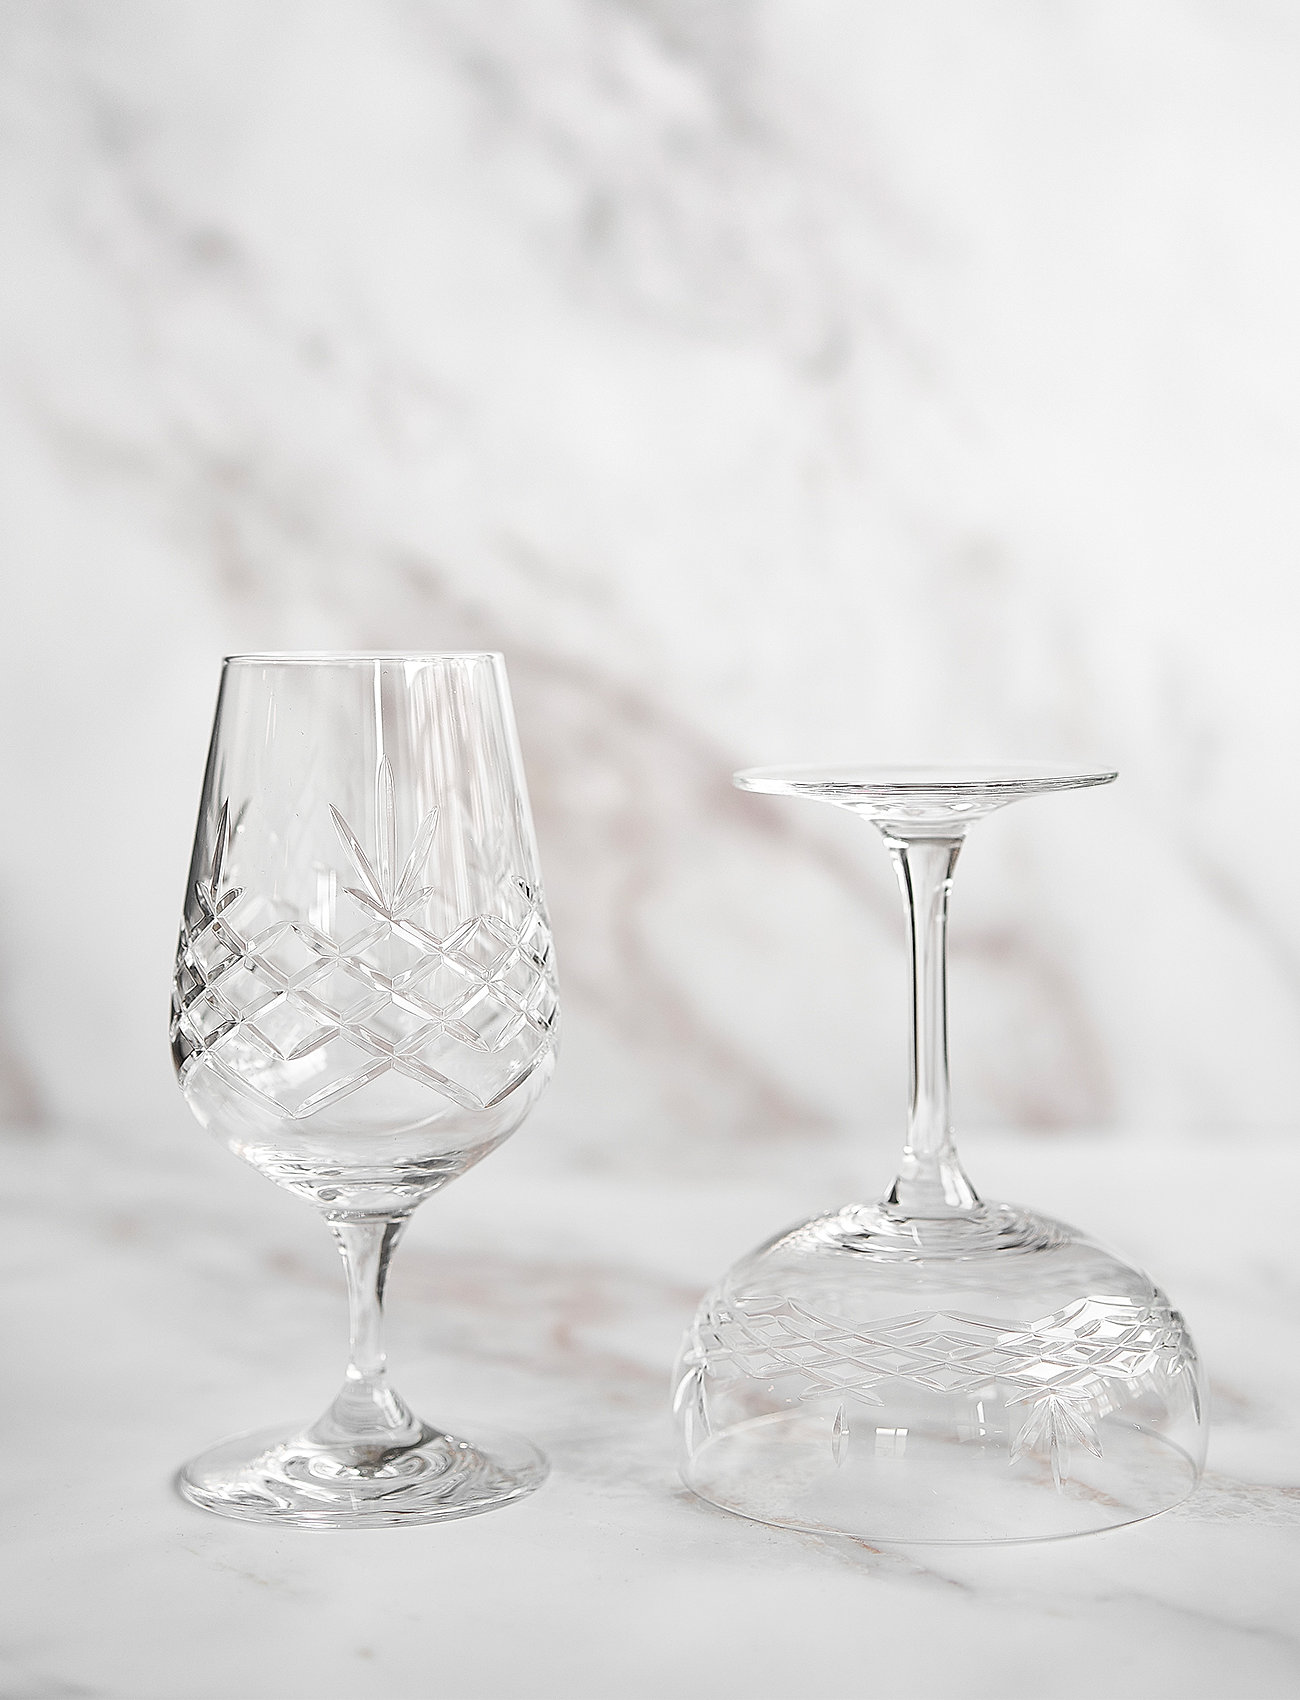 Frederik Crispy Gatsby - 2 Champagne glasses - Boozt.com